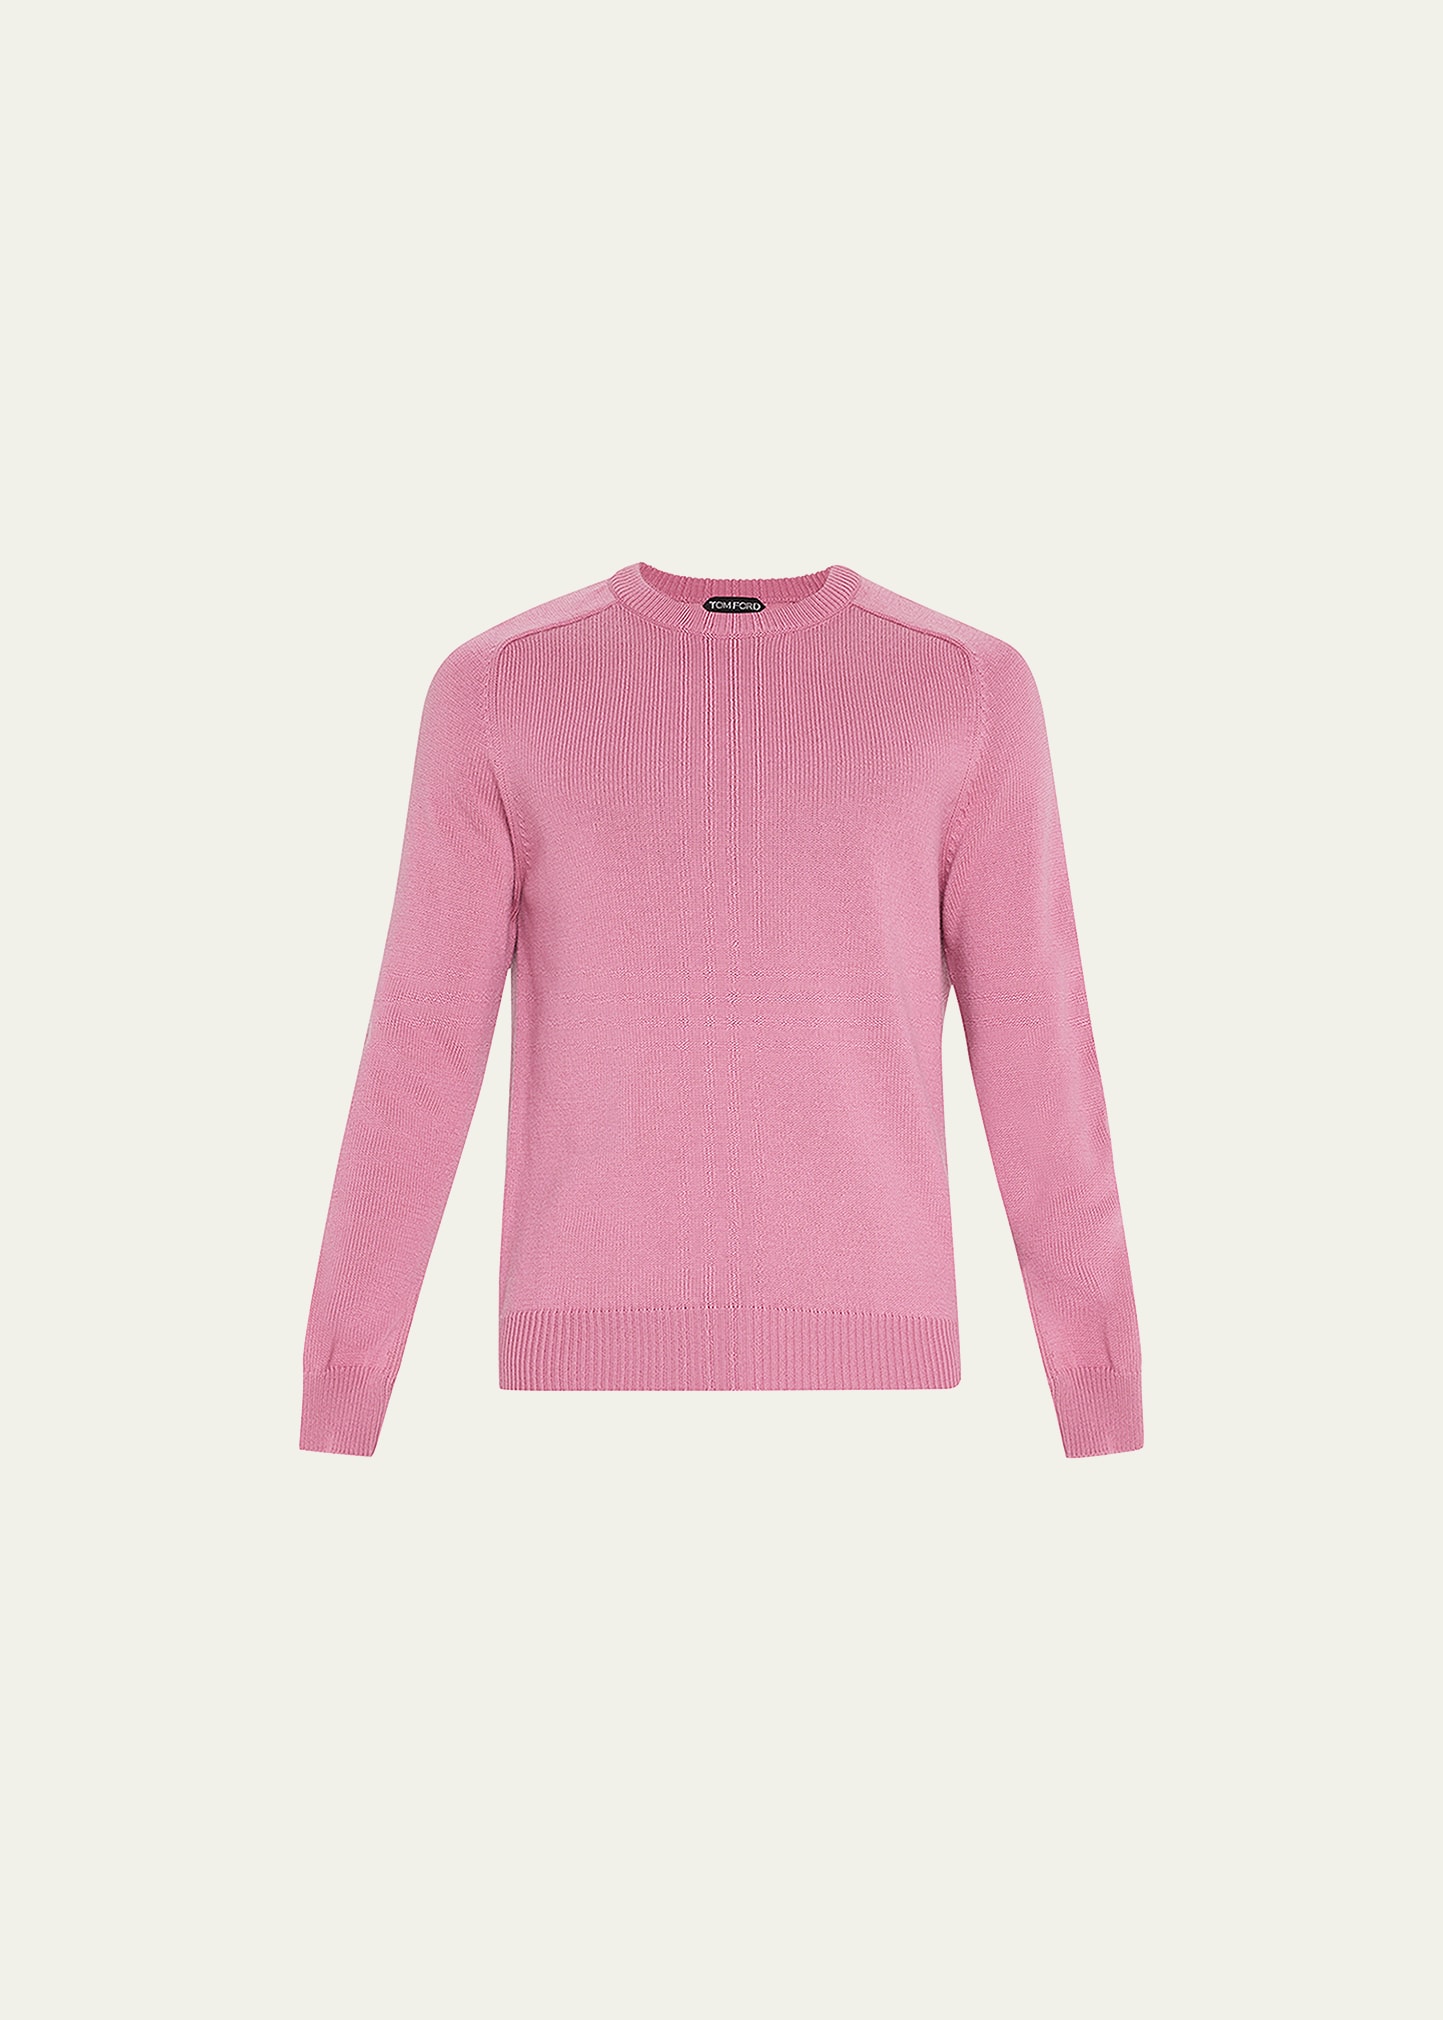 TOM FORD Men's Cashmere Knit Crewneck Sweater | Smart Closet